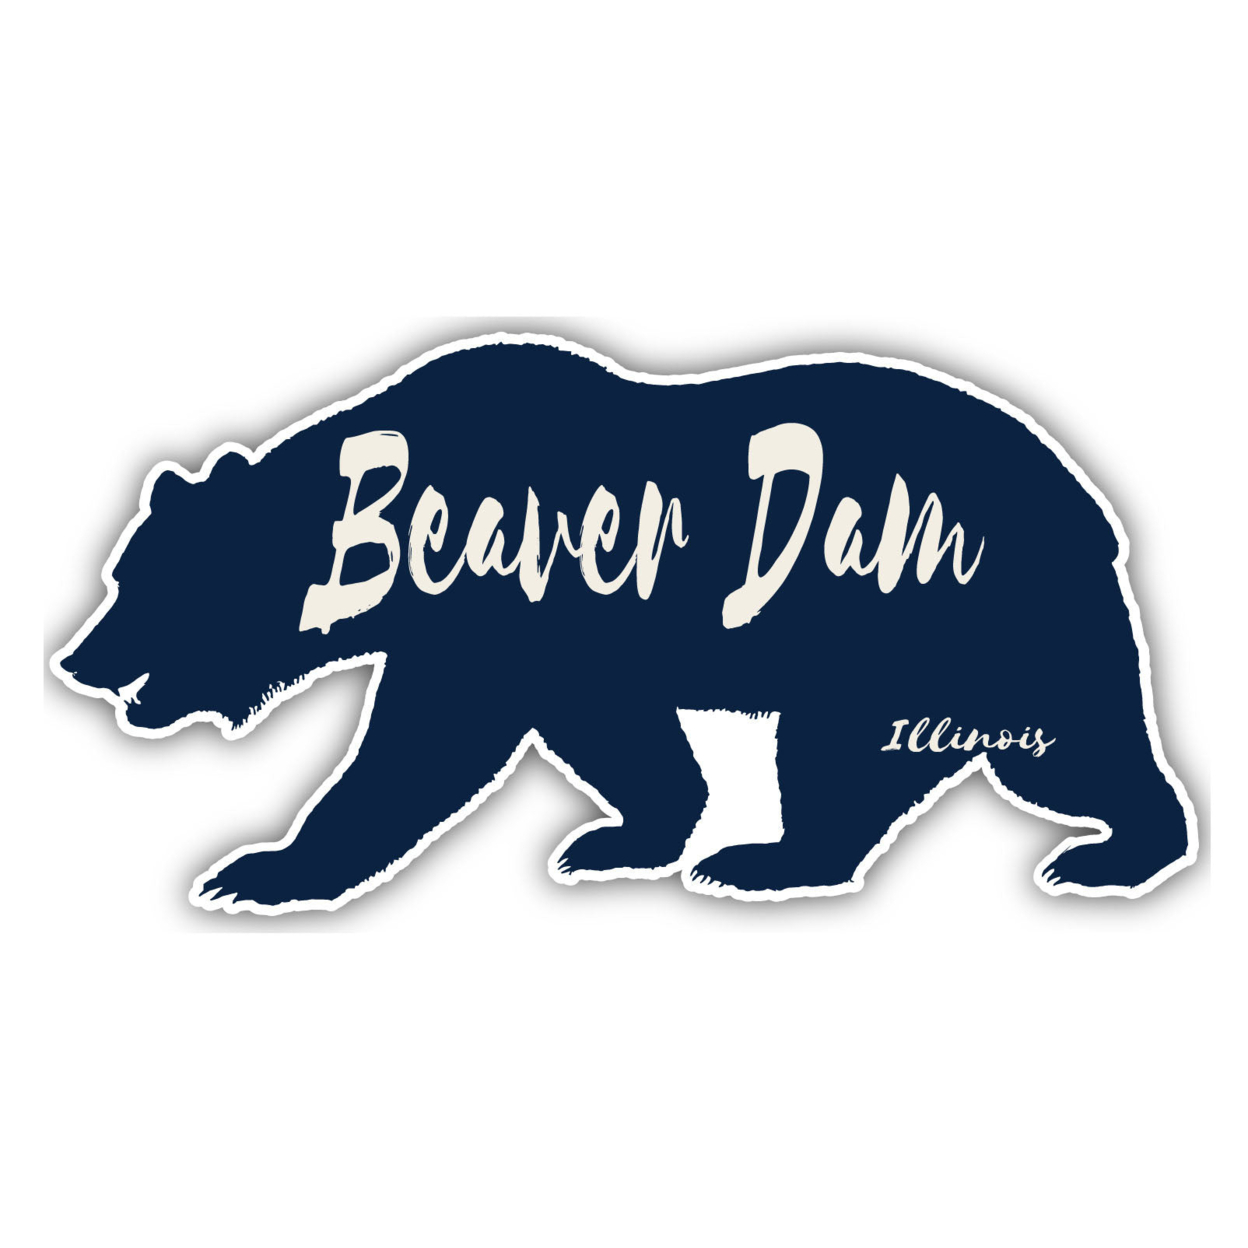 Beaver Dam Illinois Souvenir Decorative Stickers (Choose Theme And Size) - 4-Pack, 10-Inch, Bear